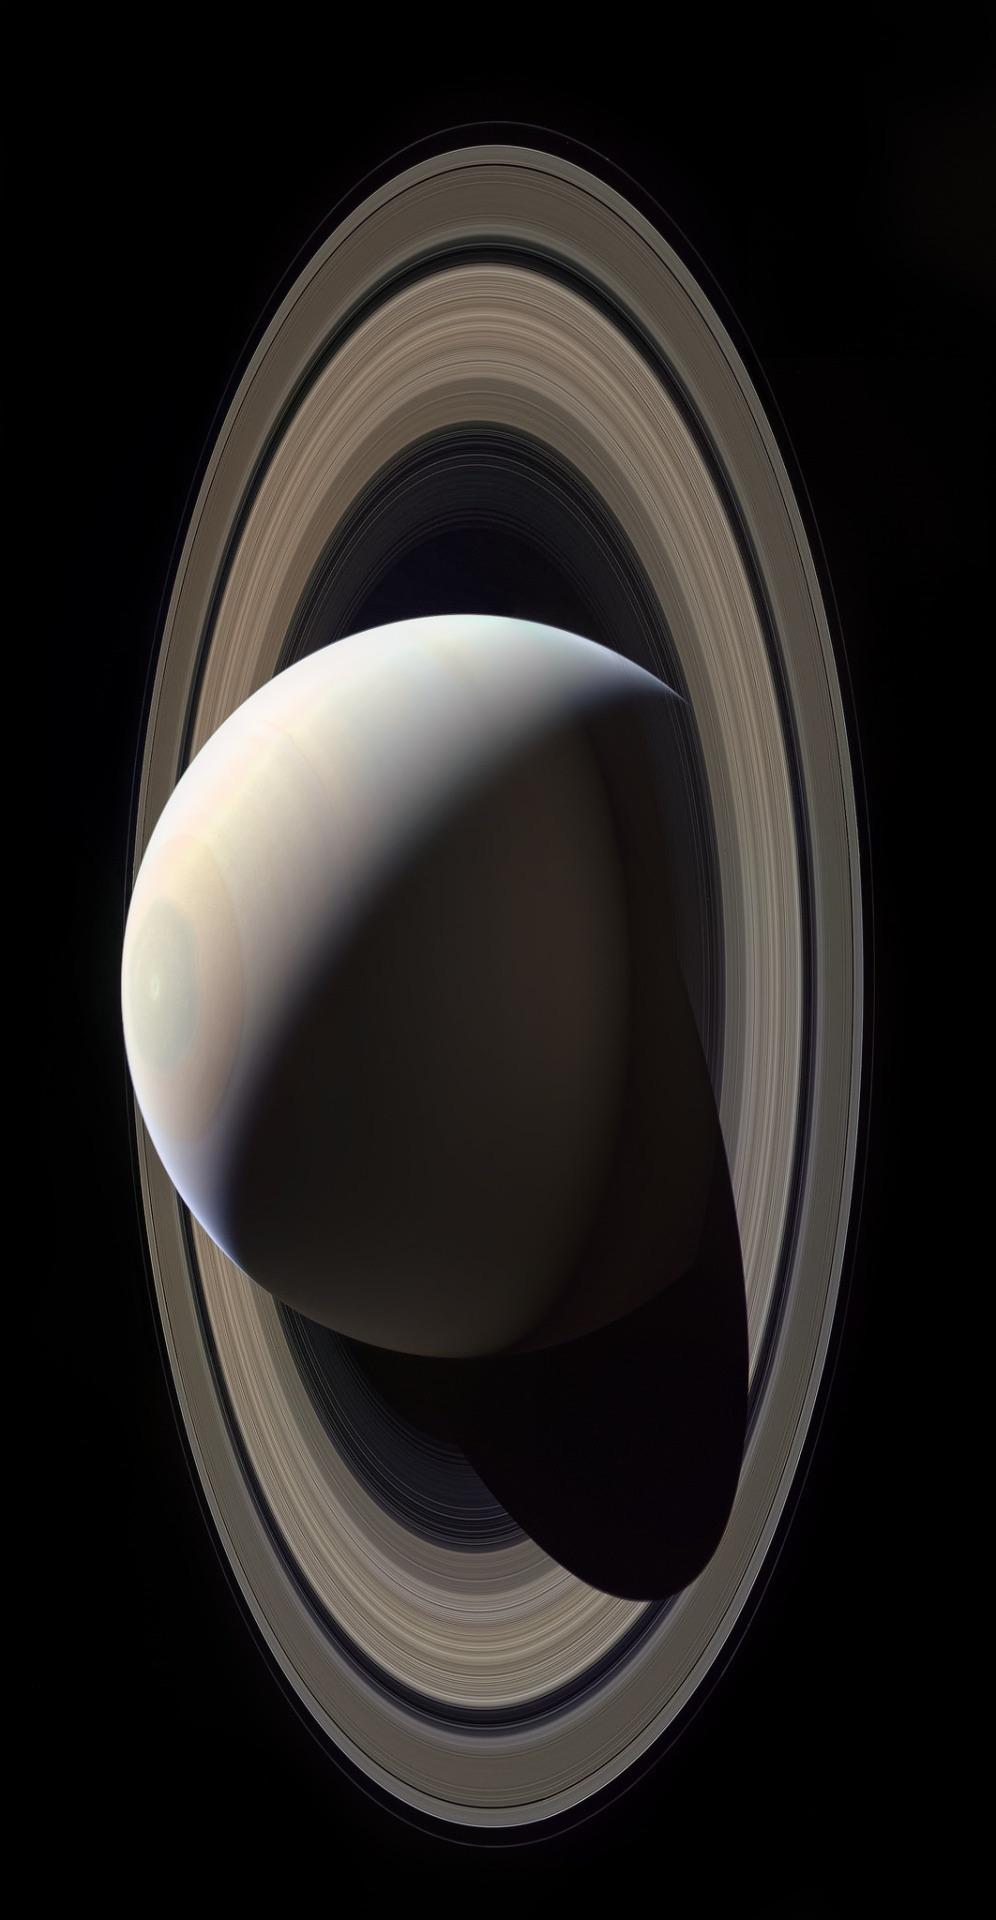 Saturn captured by NASA's Cassini spacecraft